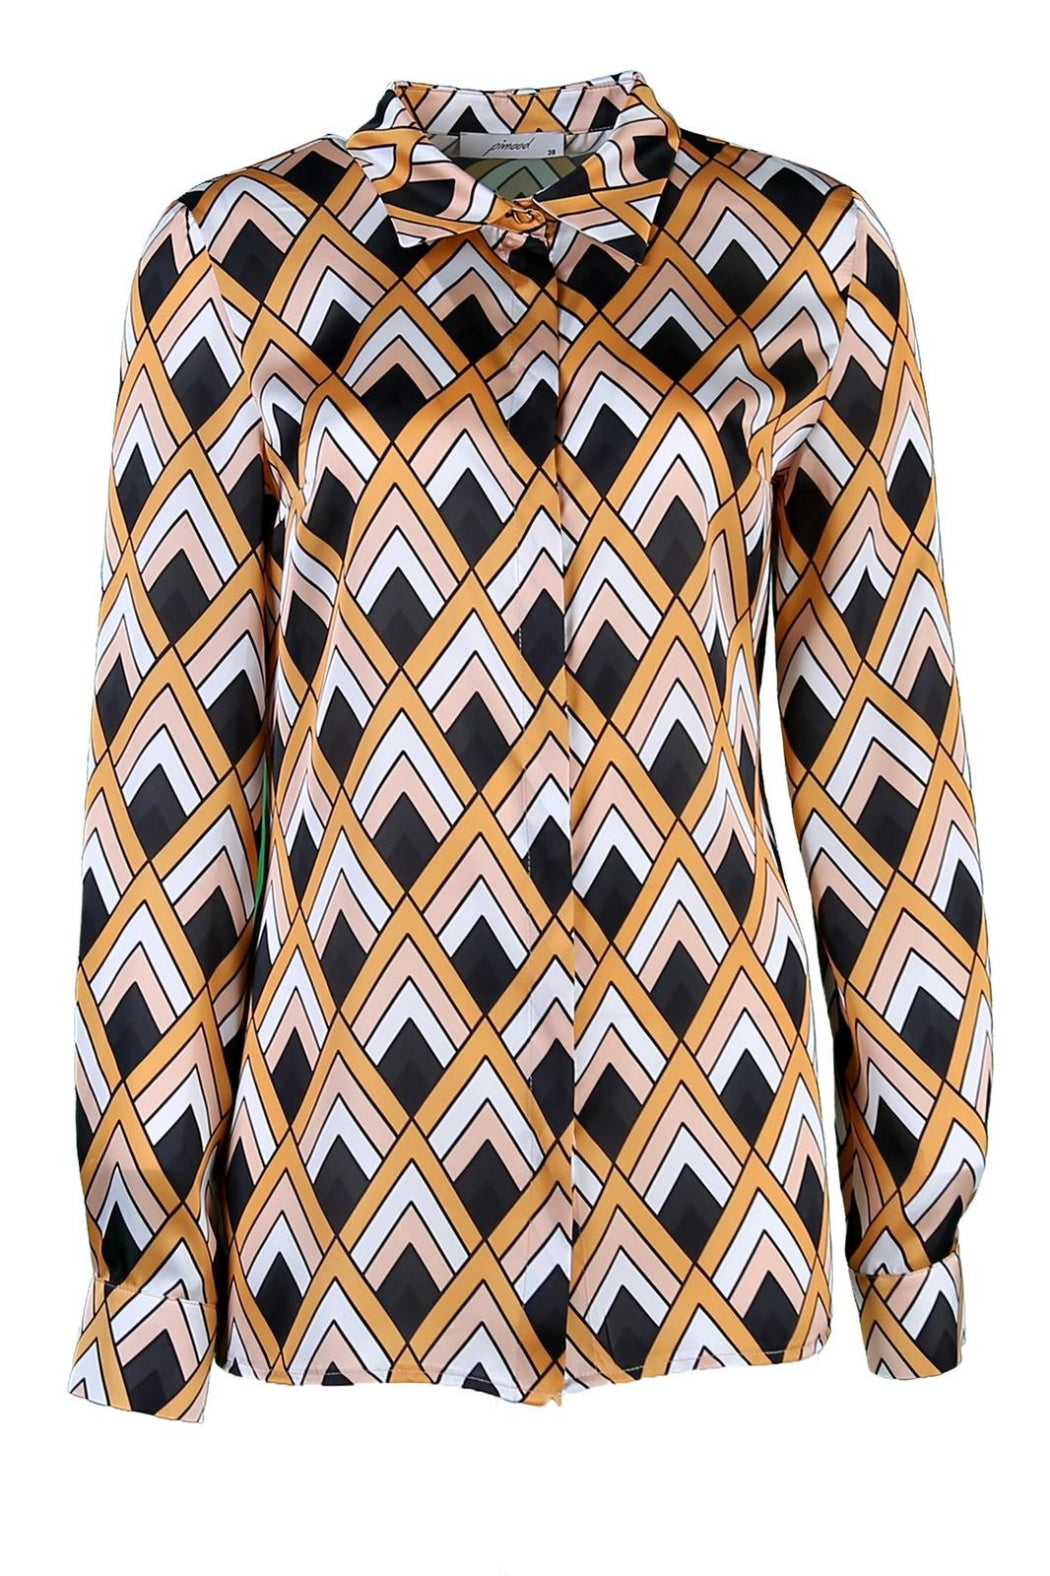 Eliza Yellow&Black&White Triangle Patterned Basic Model Satin Women's Shirt